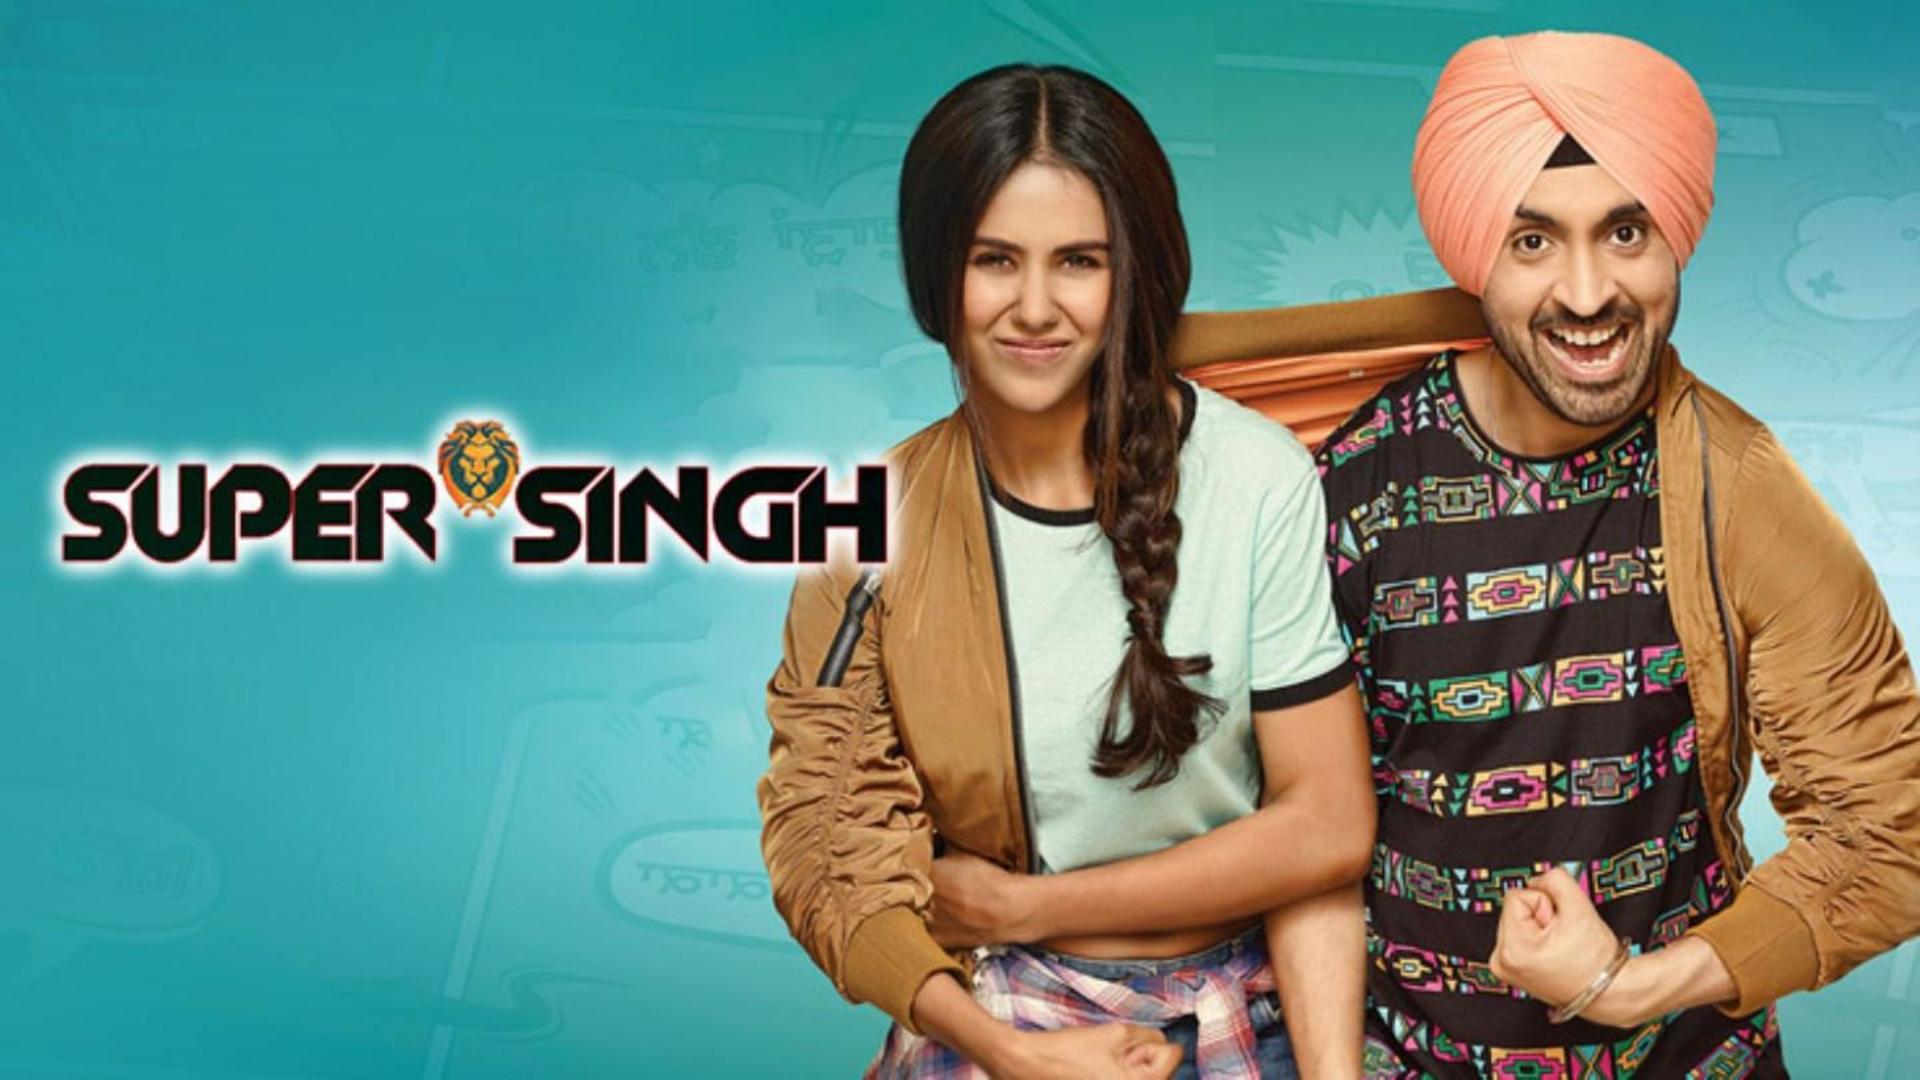 Super Singh Watch Full Movie Online, Streaming with Subtitles | Flixjini